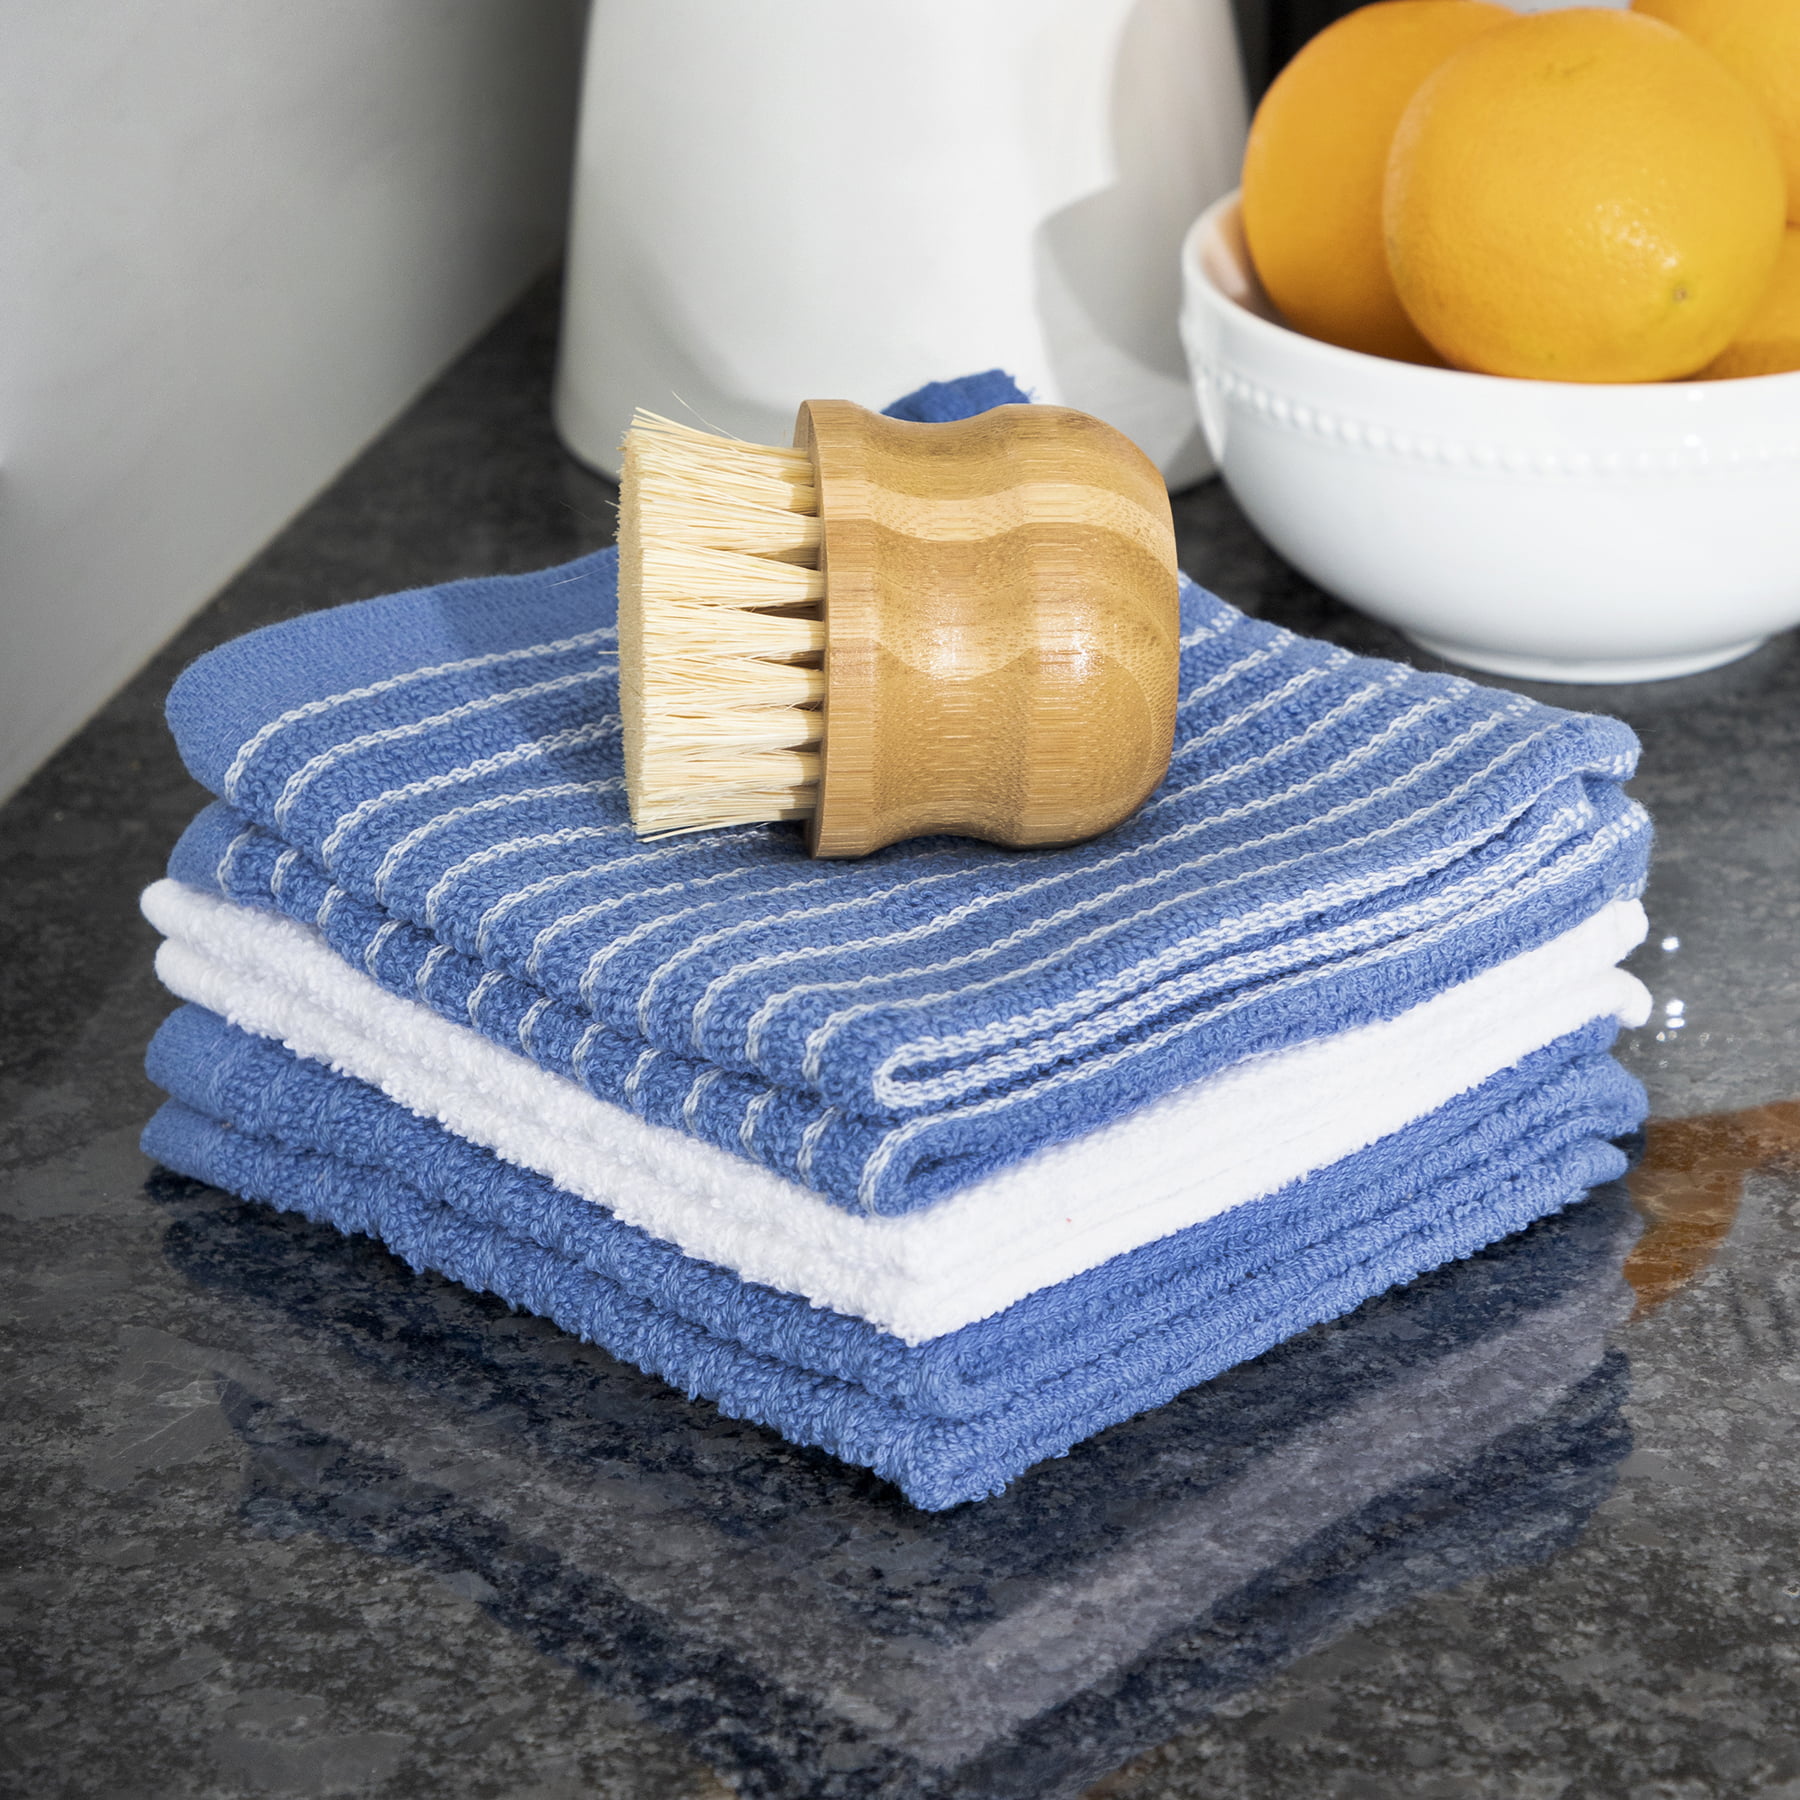 Ritz Gray Cotton Terry Horizontal Stripe Bar Mop Kitchen Towel Set of 4